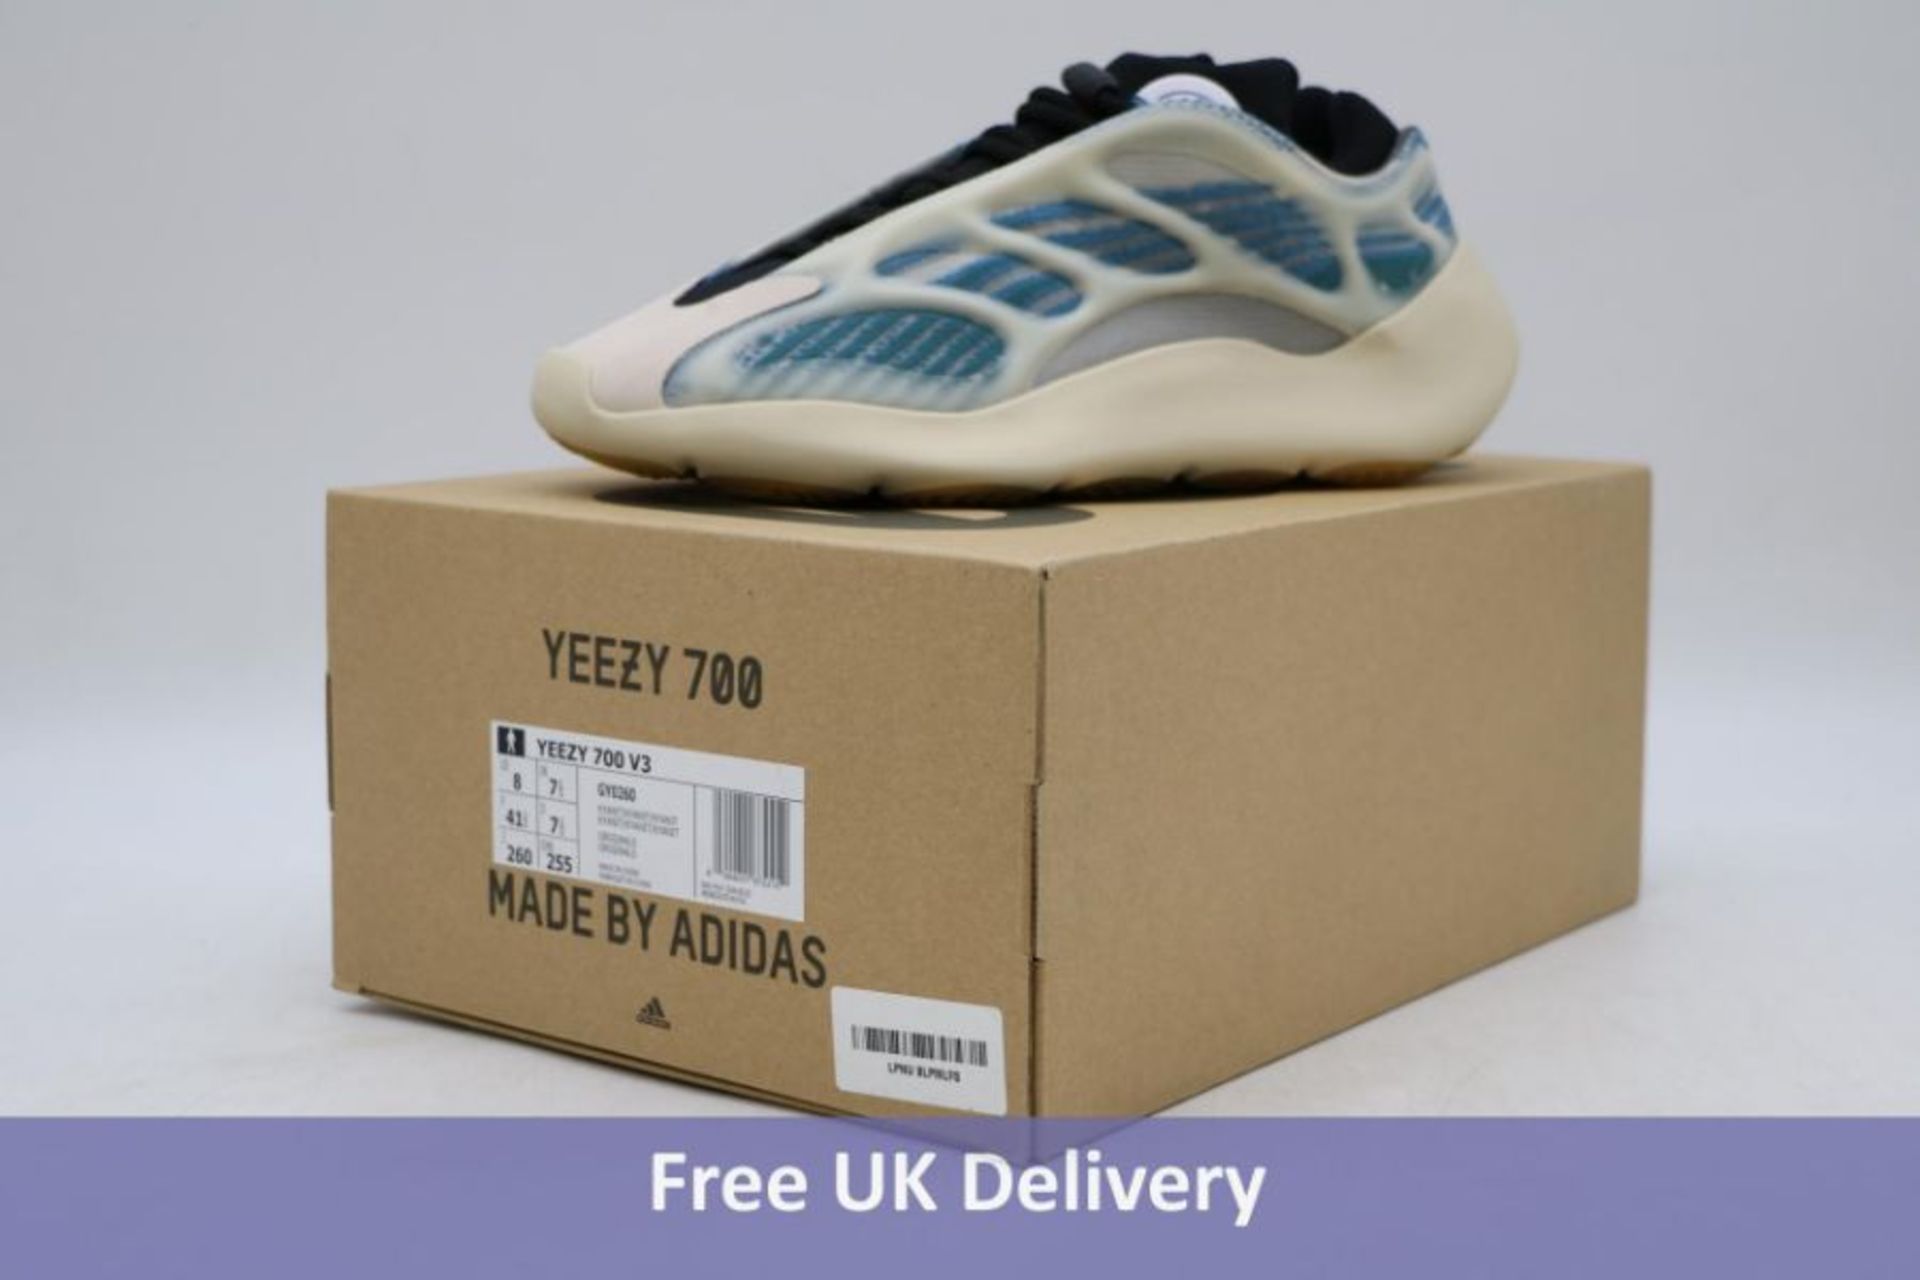 Adidas Men's Yeezy 700 V3 Trainers, Beige/Blue, UK 7.5